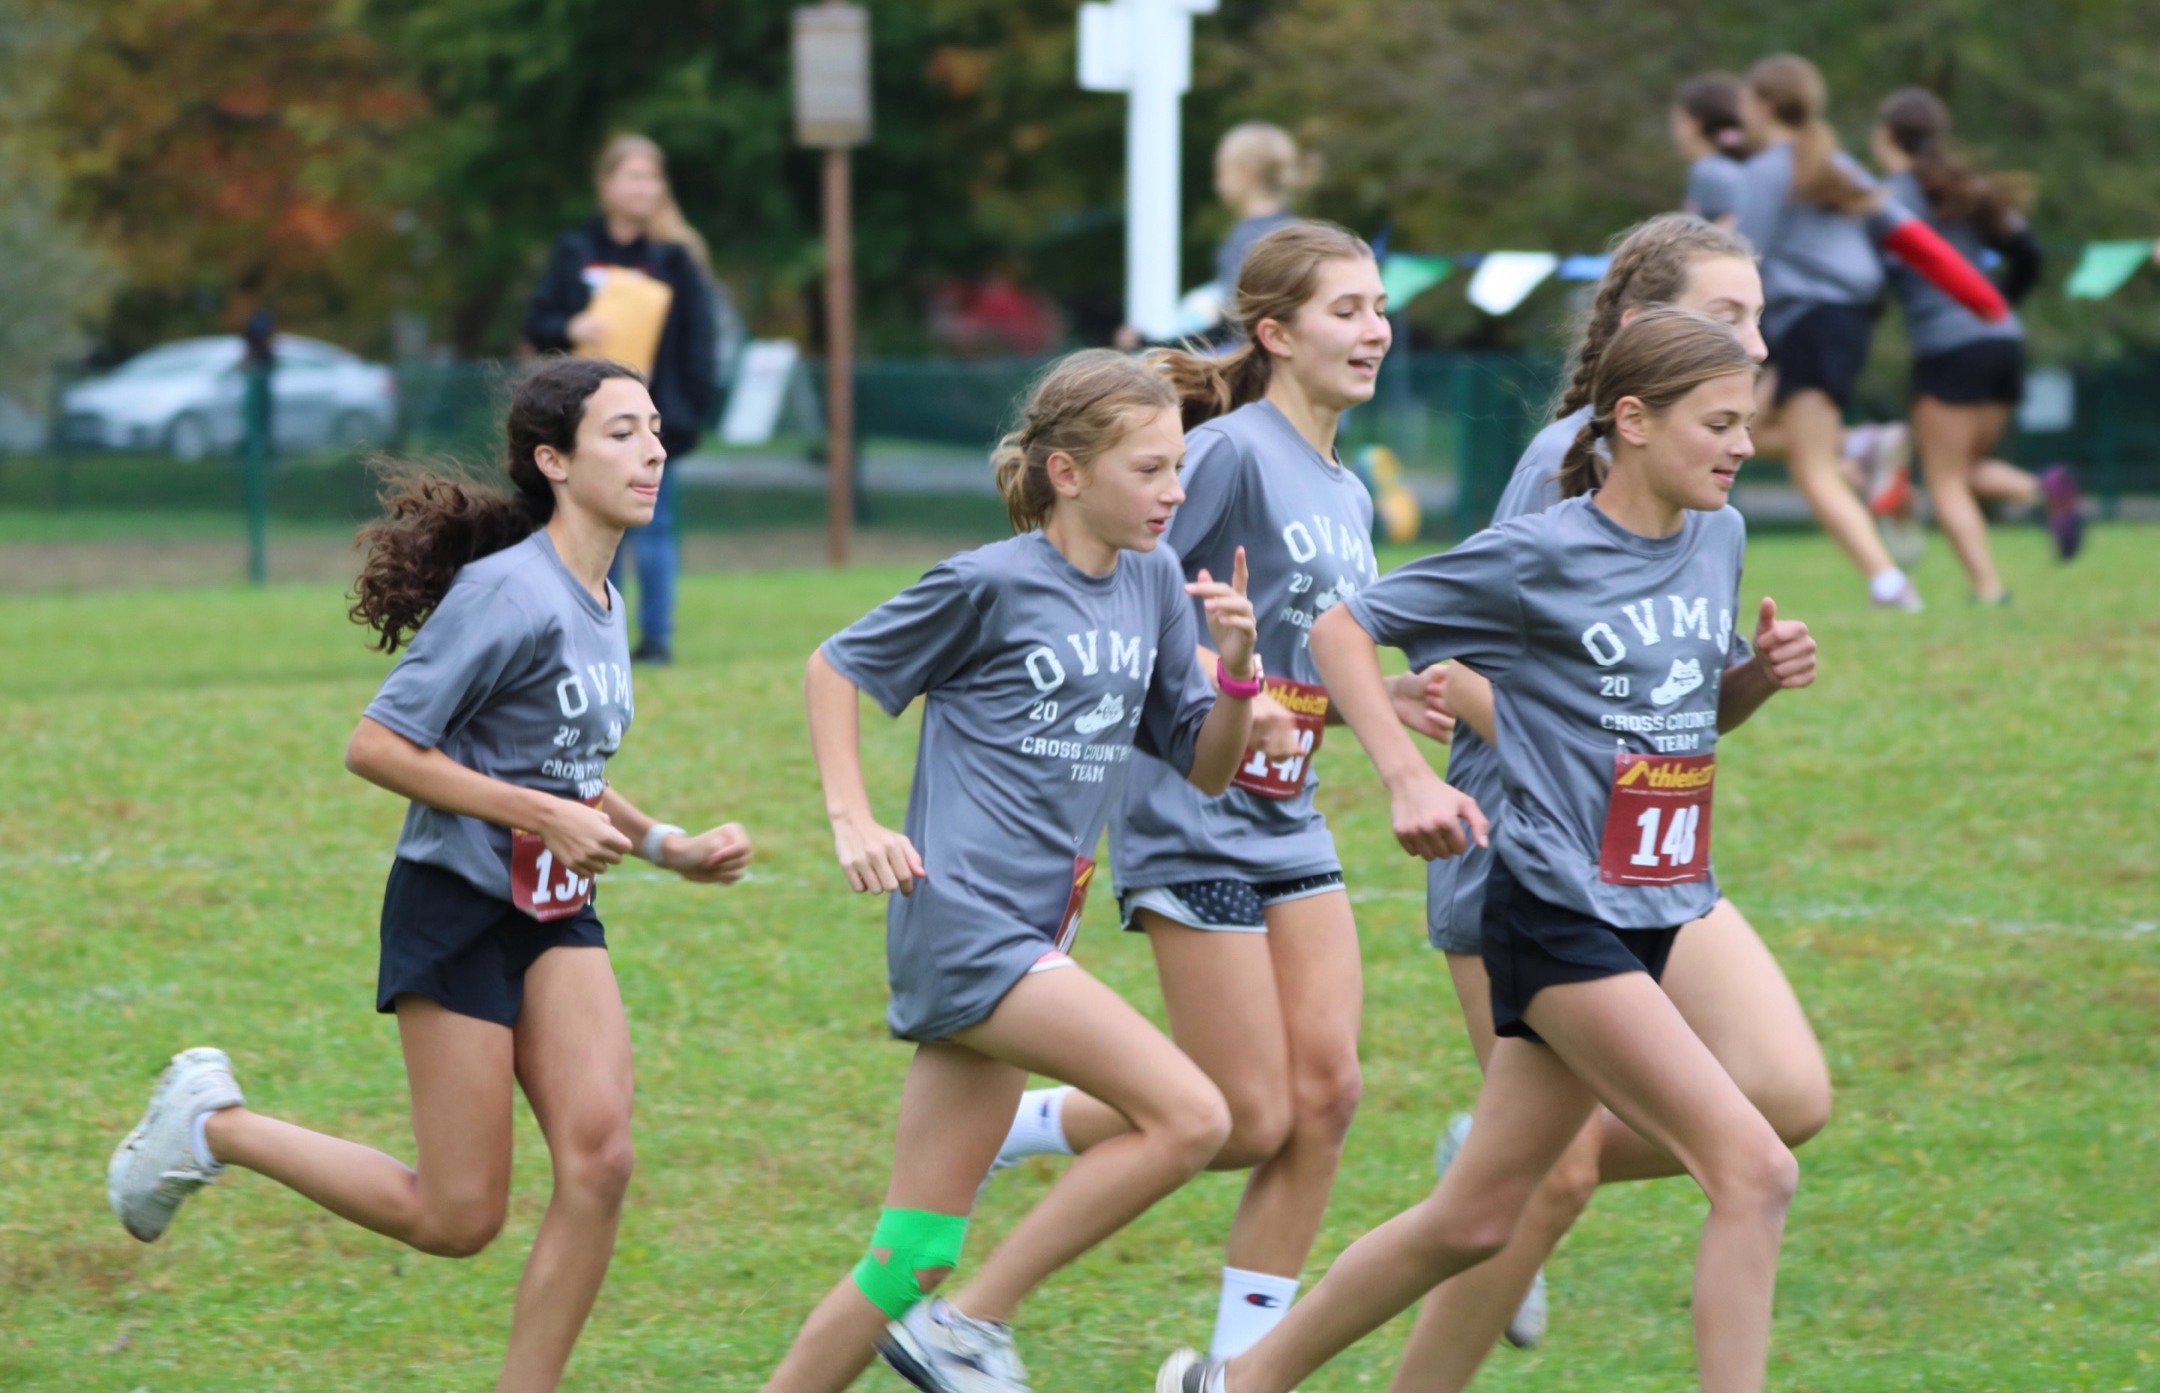 girls running in cross country race